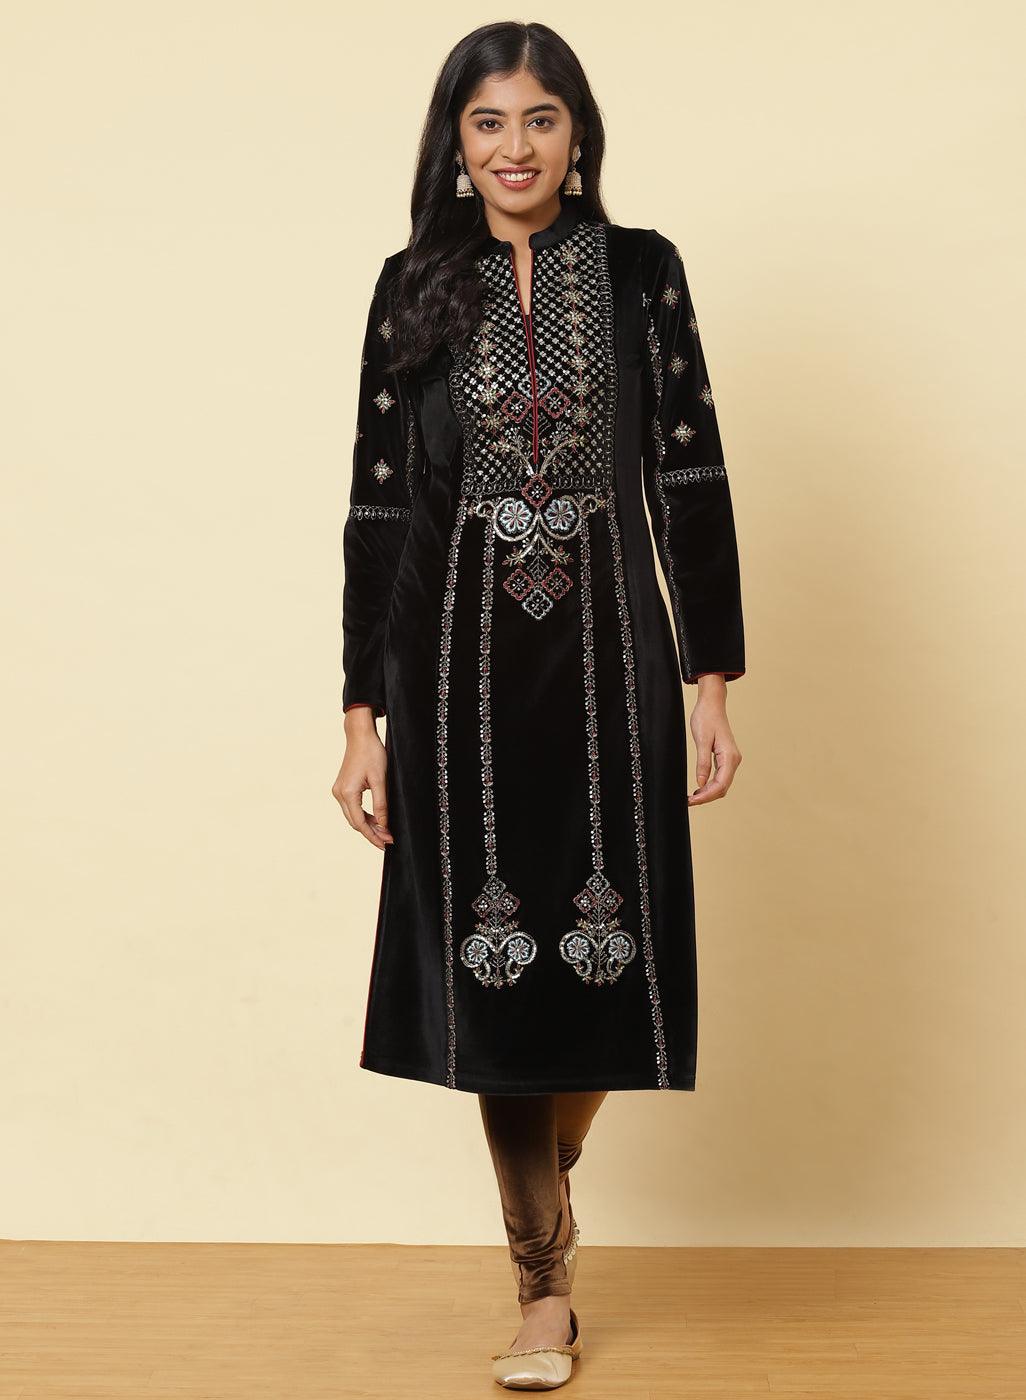 Latest Black dress designs|| Black kurti design ideas#dress #design  @BismalCorner - YouTube